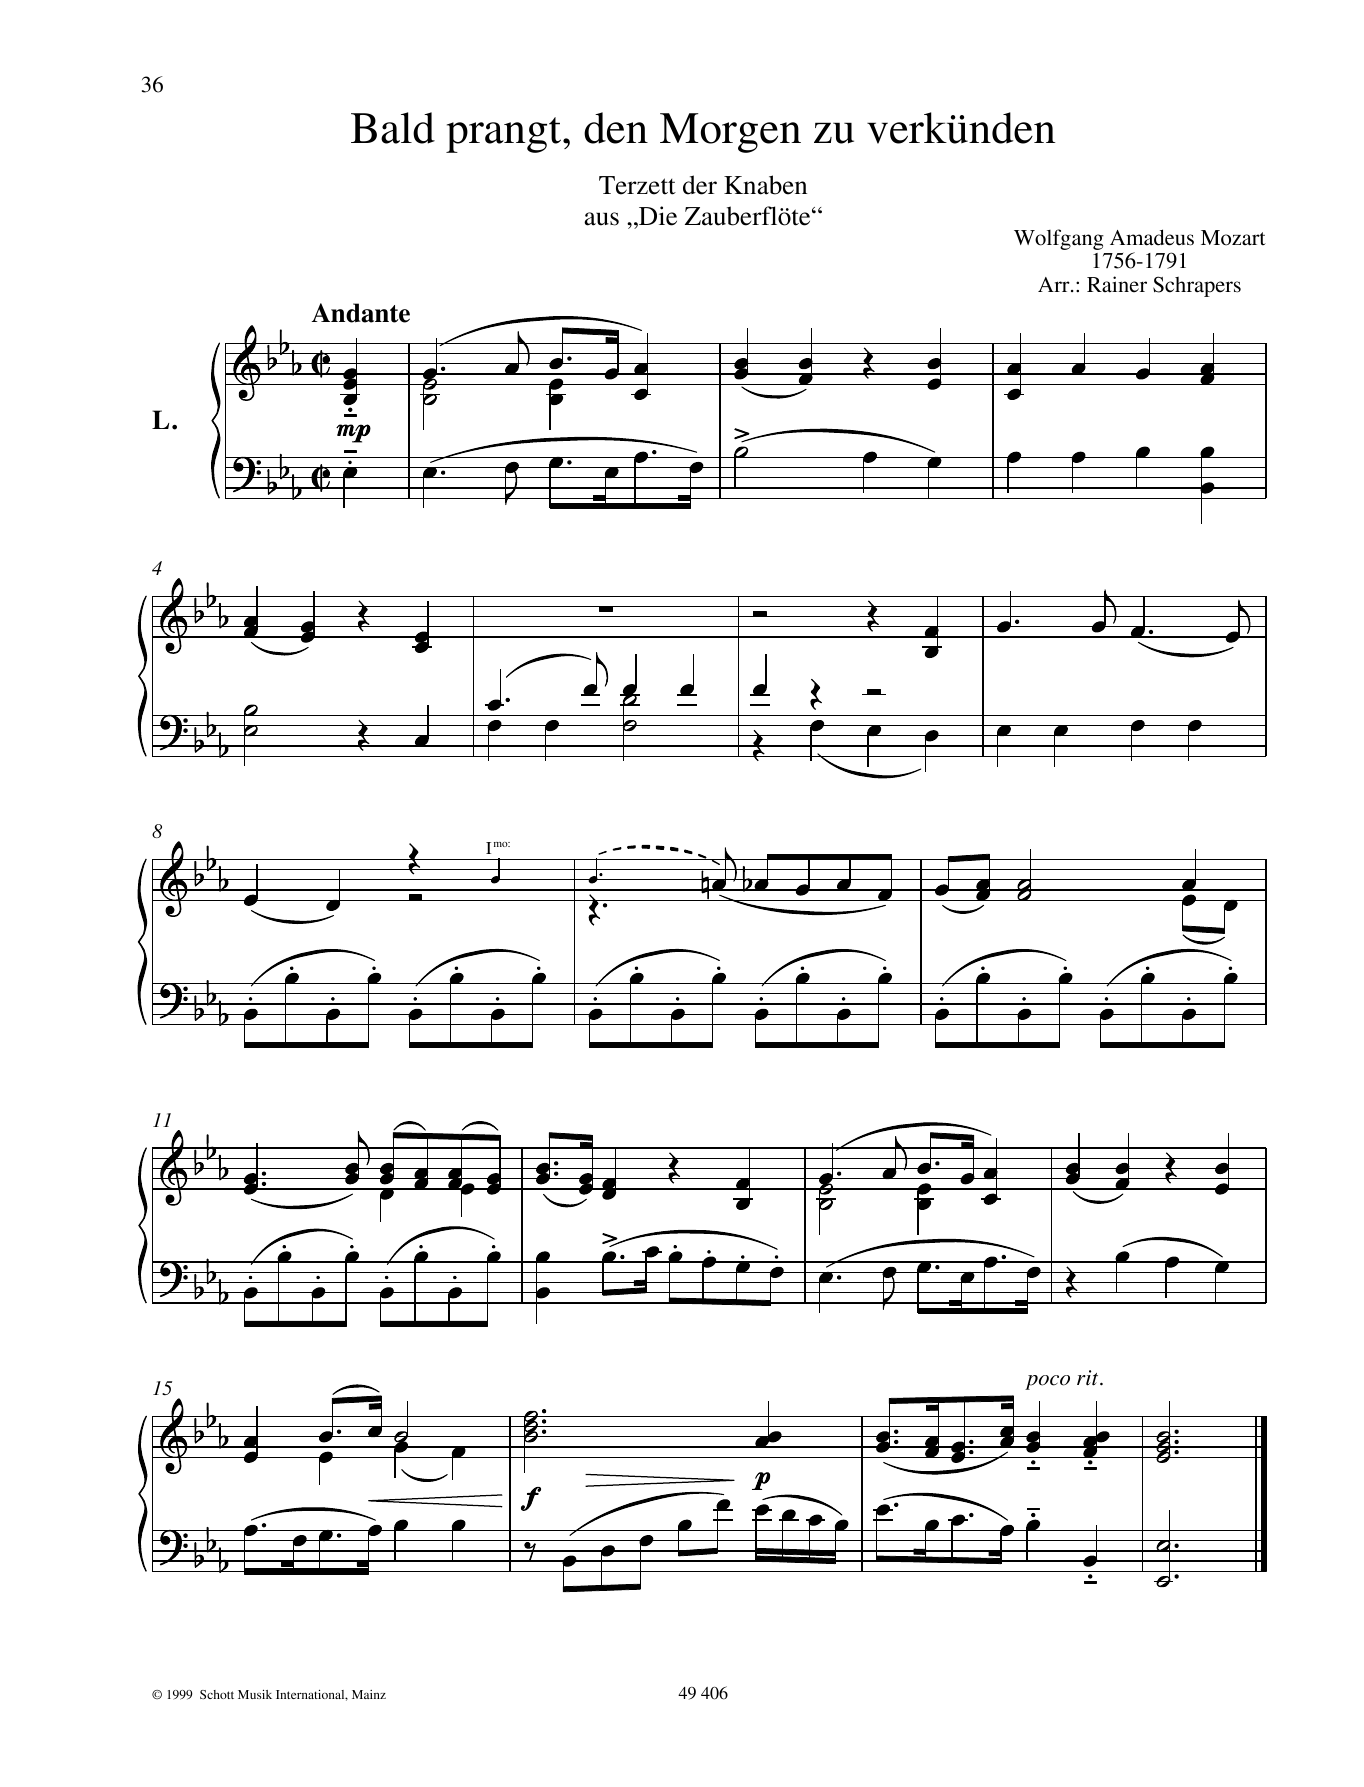 Bald prangt, den Morgen zu verknden (Piano Duet) von Wolfgang Amadeus Mozart